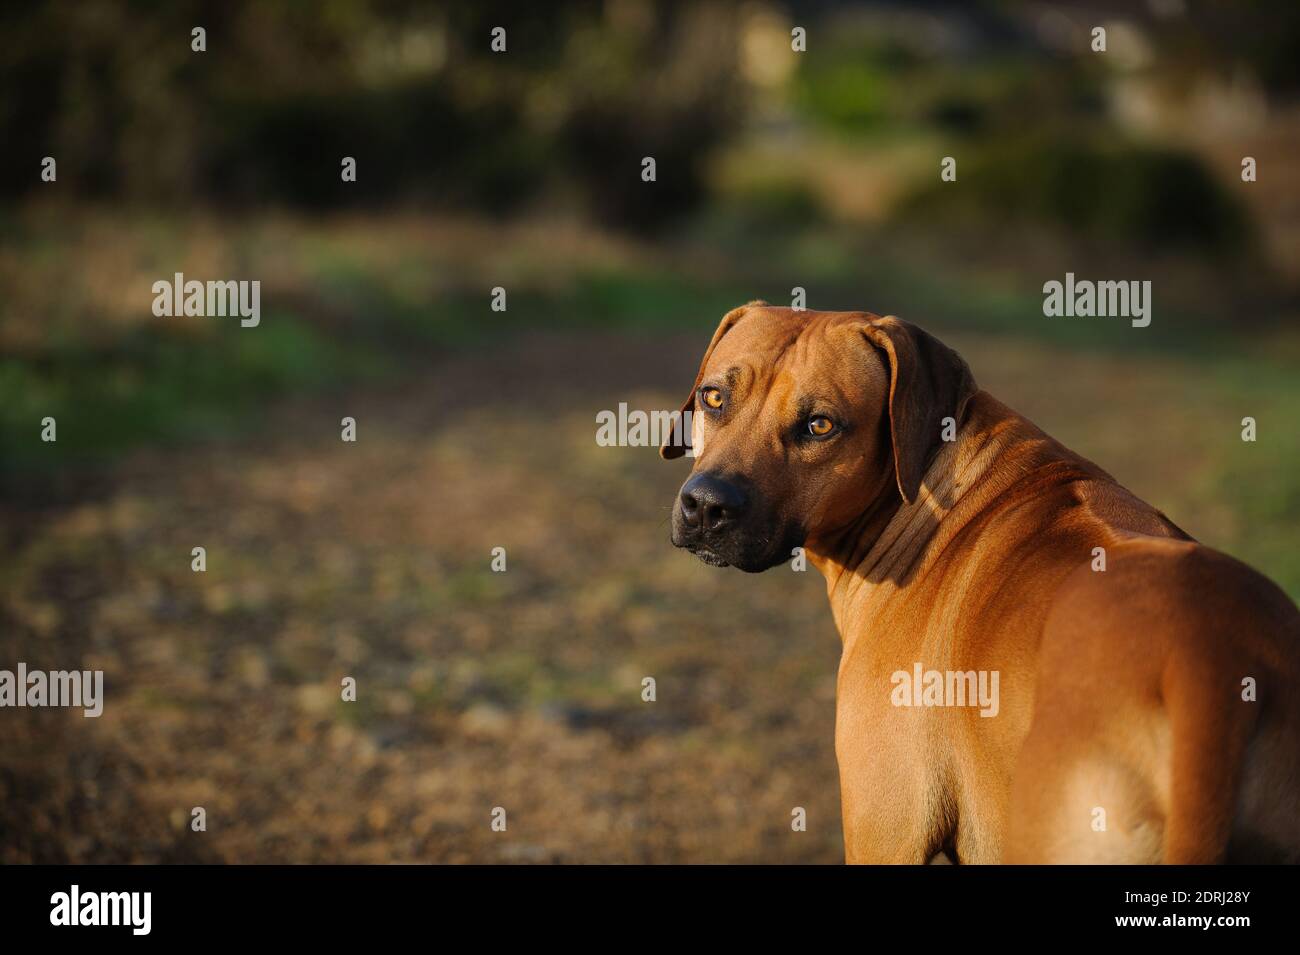 Portrait Of Dog Standing On Grassy Field Stock Photo